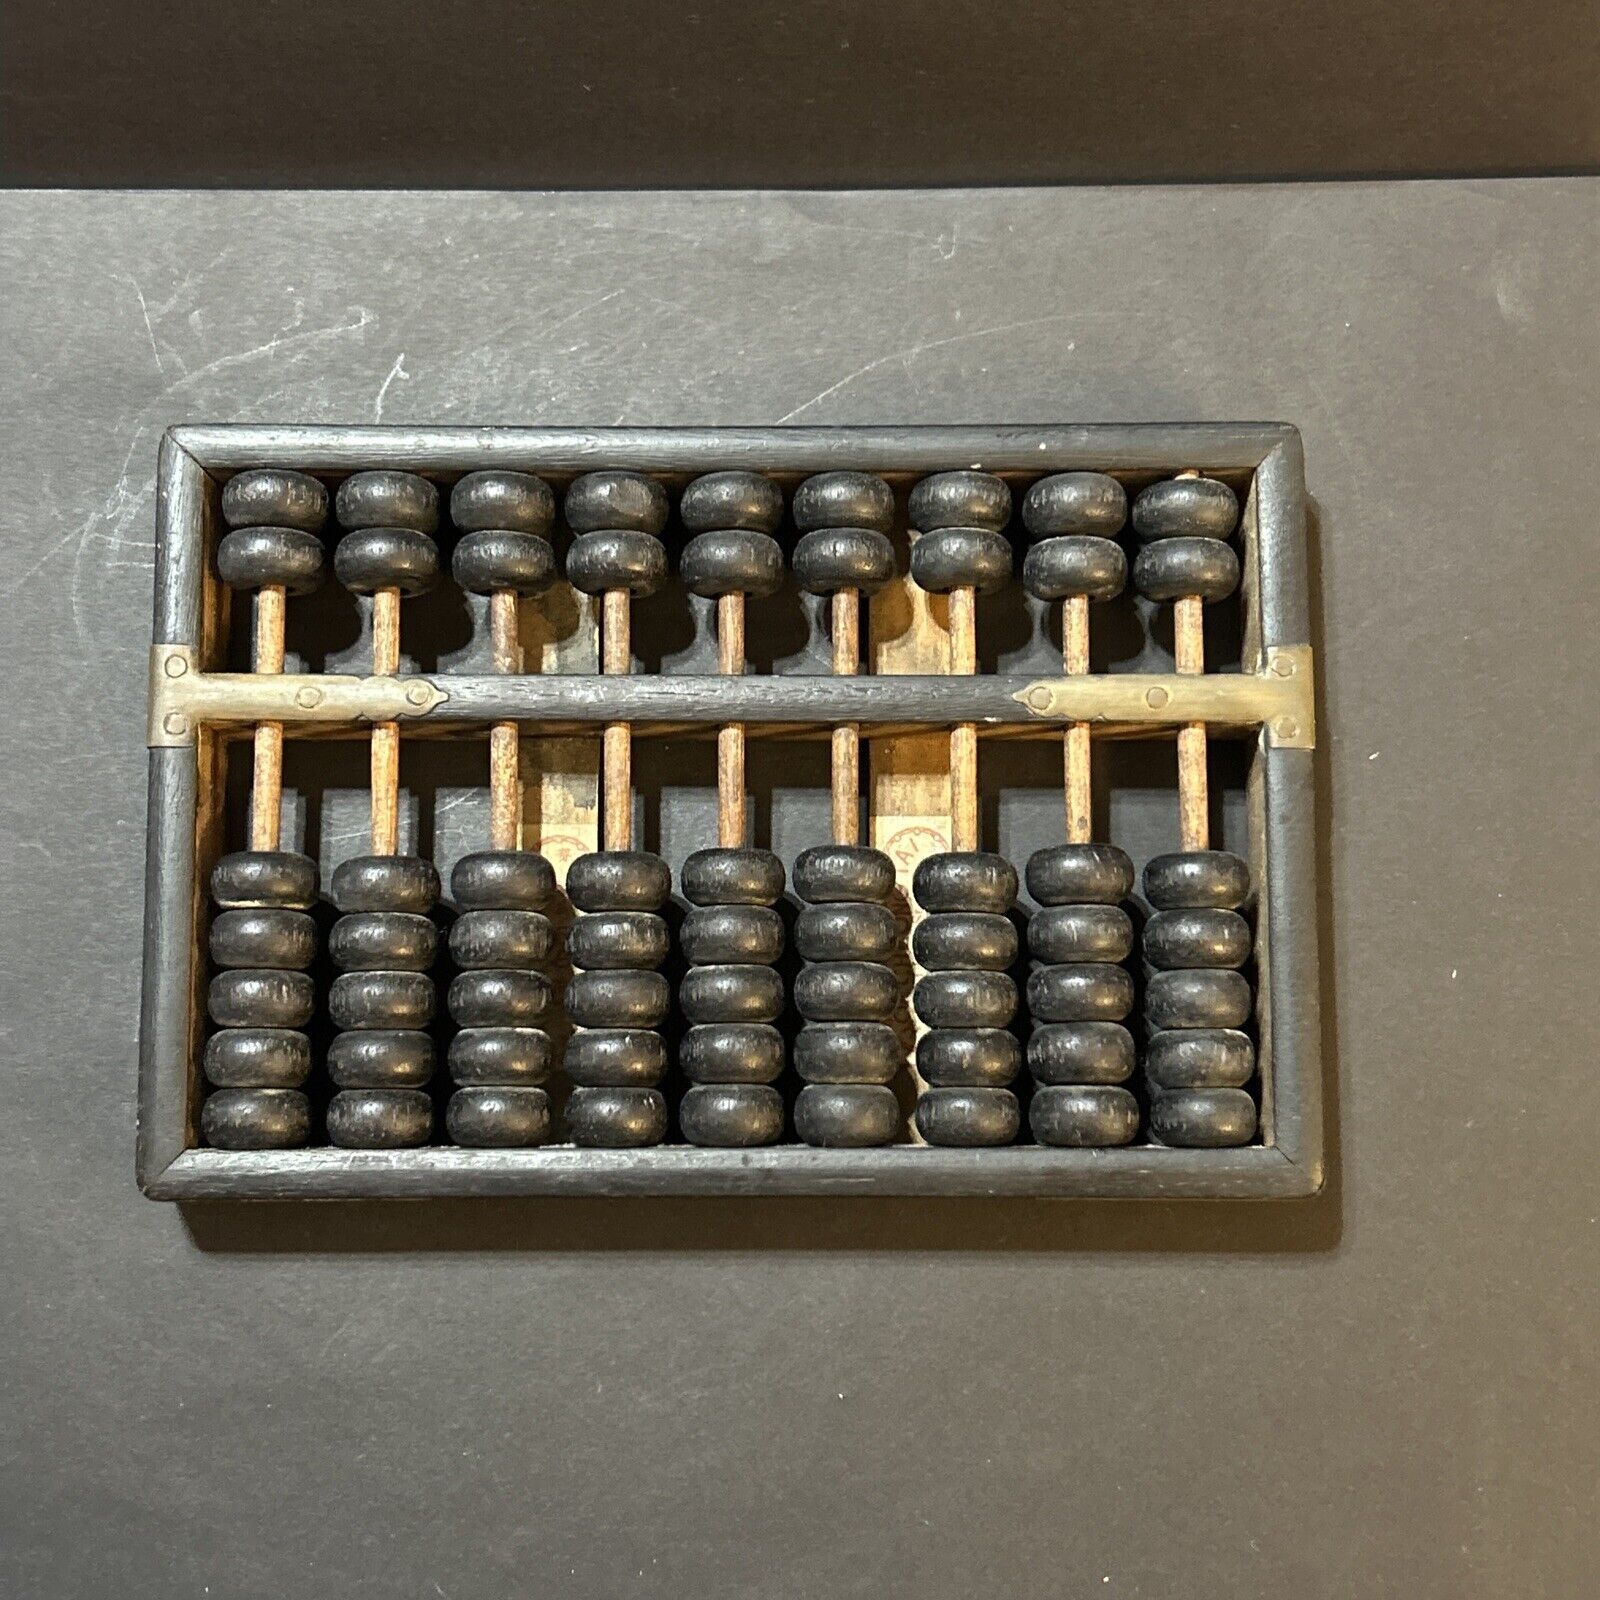 Wood & Brass Abacus Lotus Flower Type 9 Rods 63 Beads Original Antique NICE